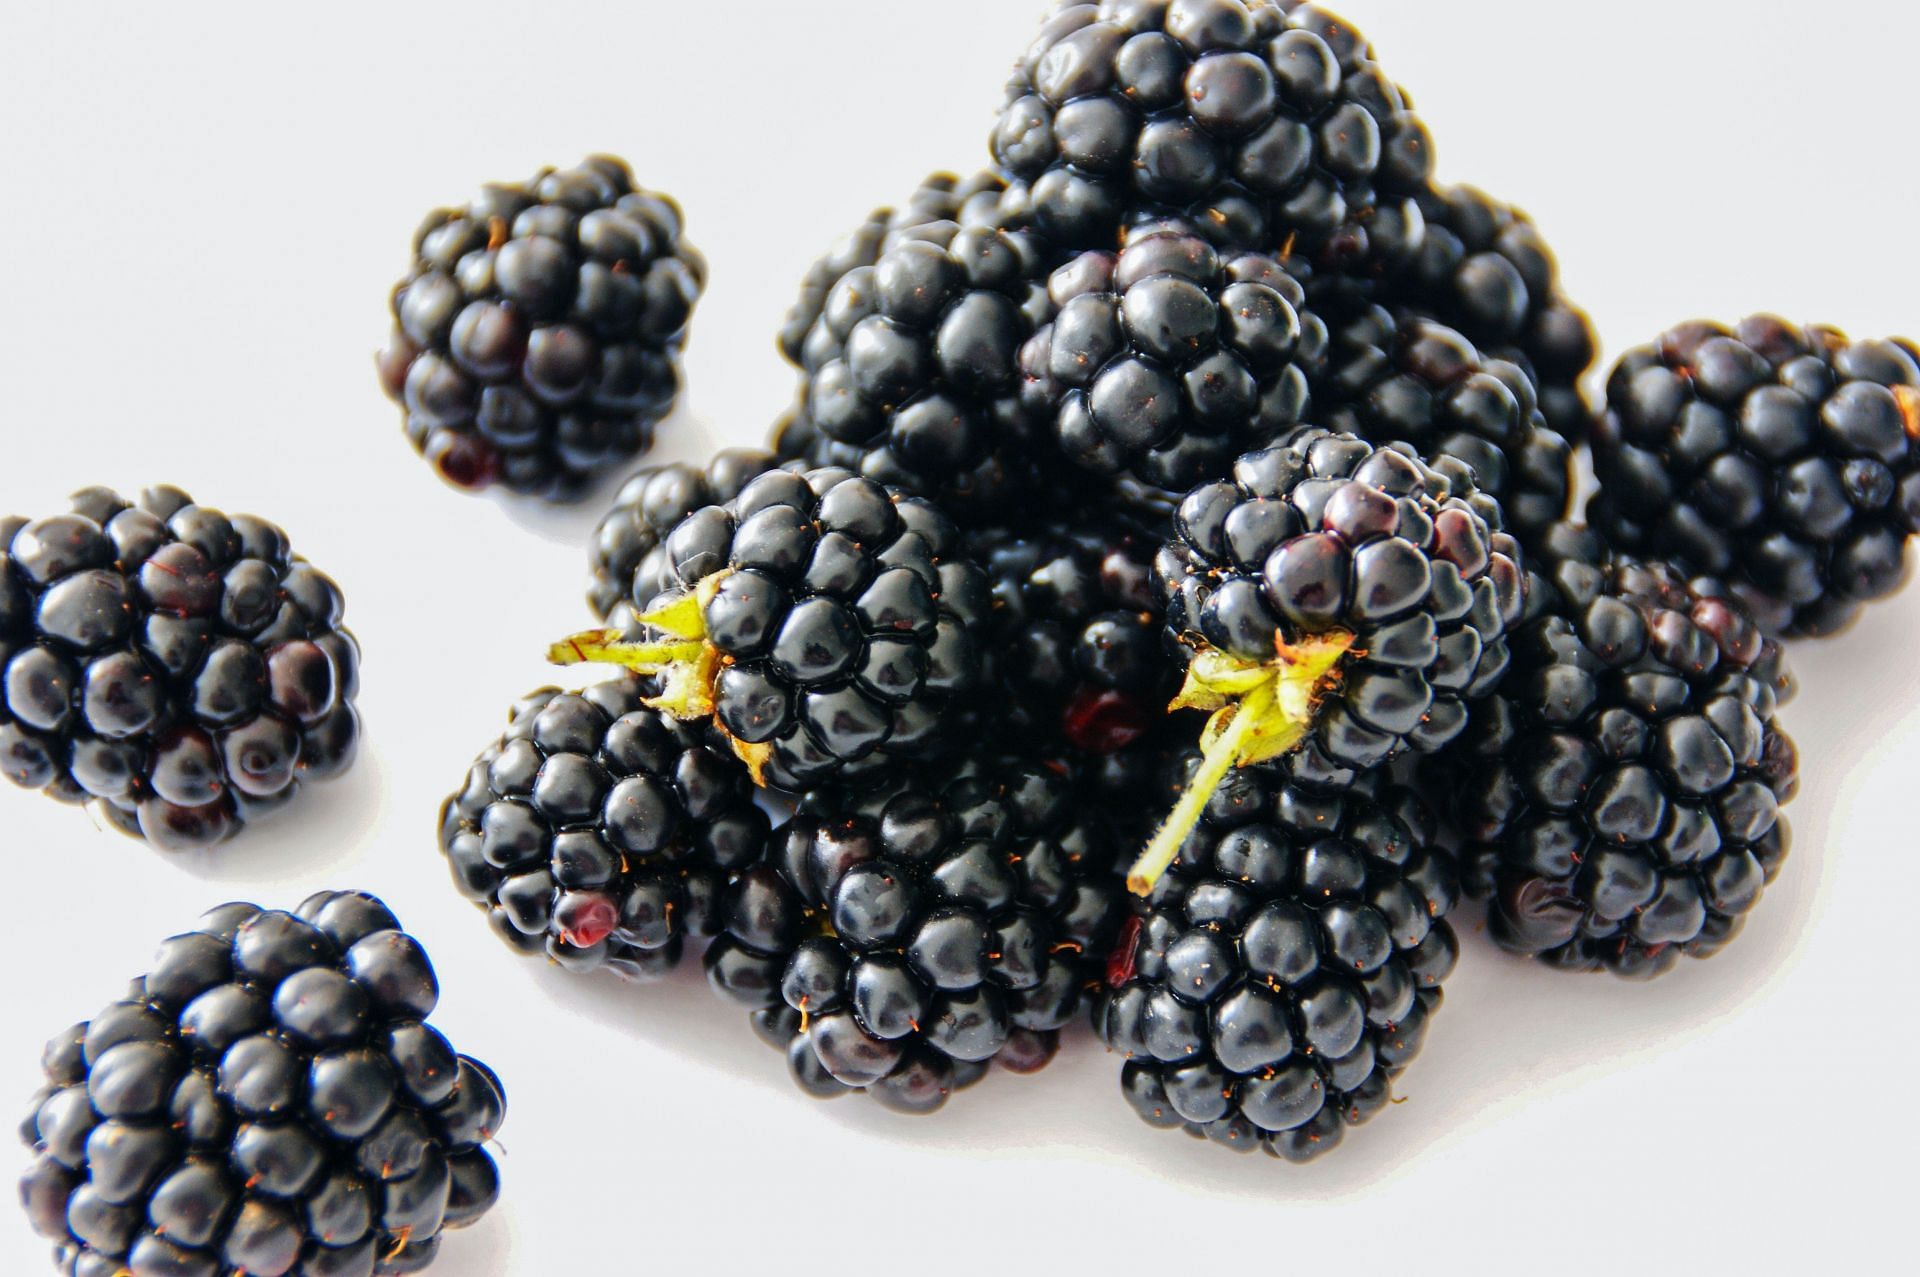 Blackberry: a nutrient-dense fruit with numerous health benefits (Image via Pexels)